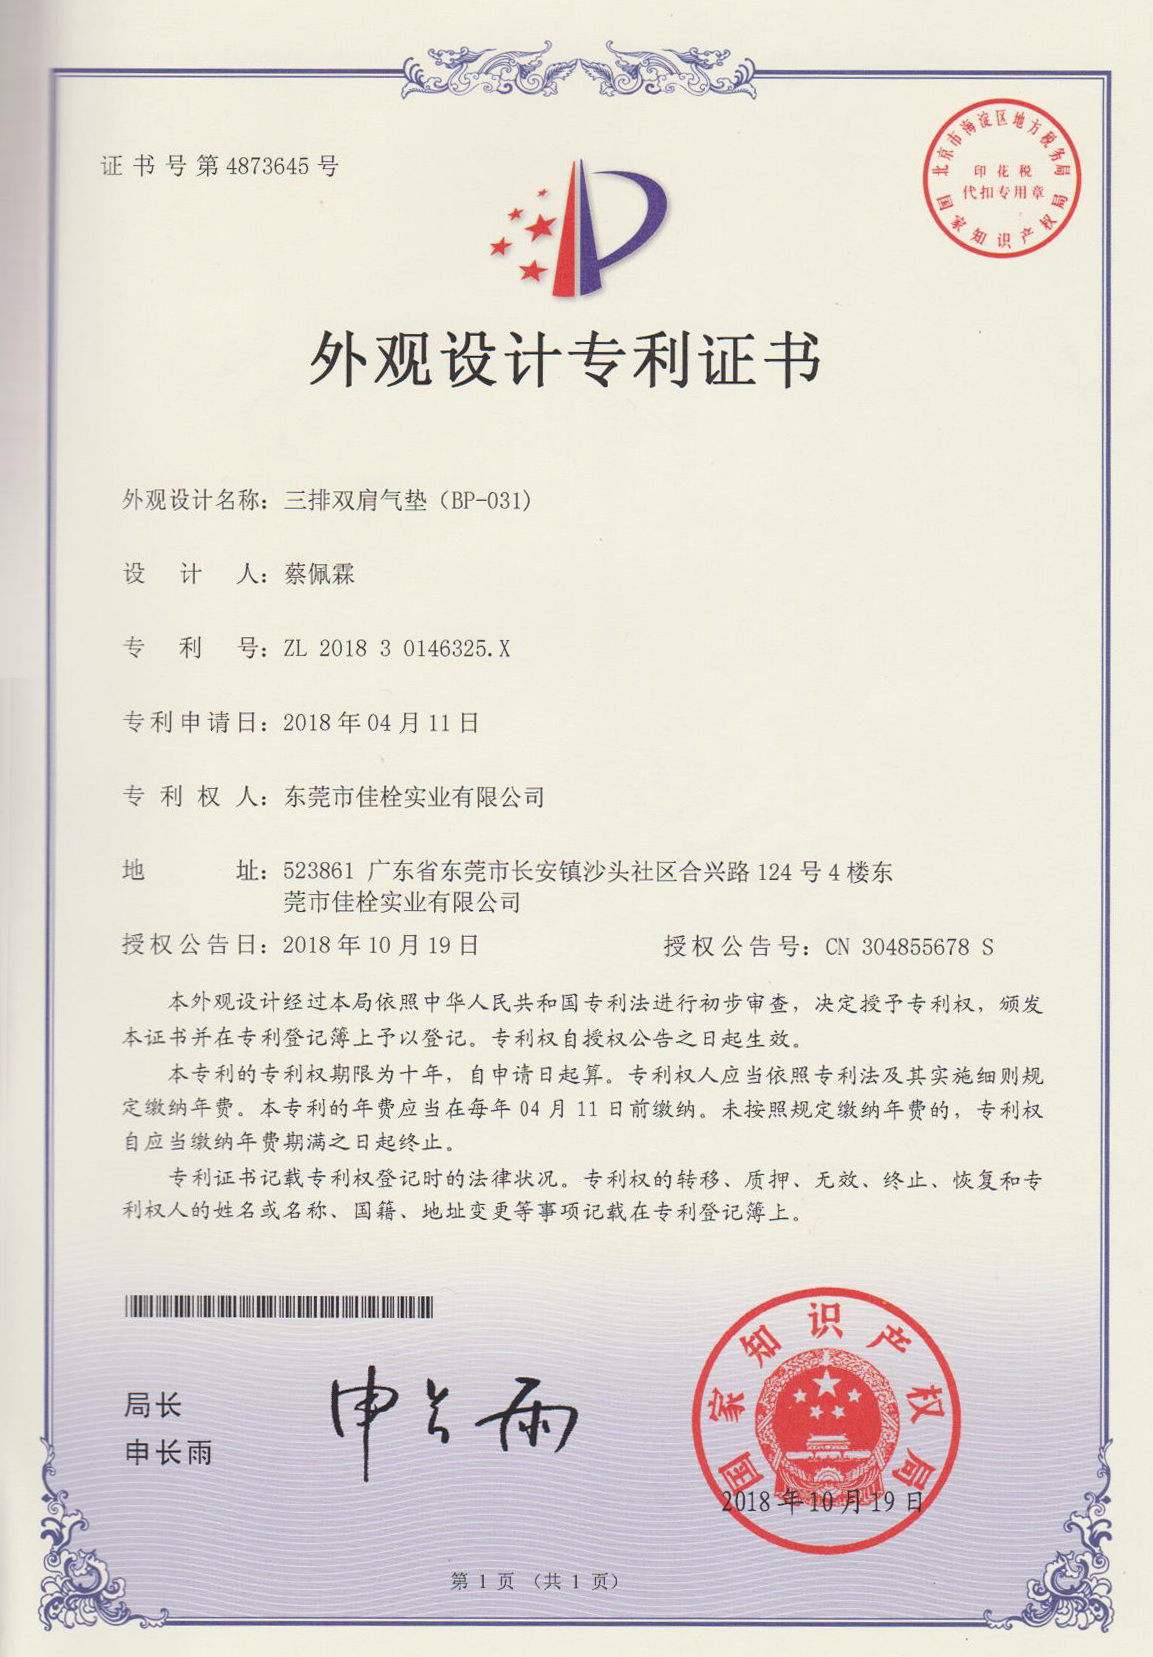 Certificate of Patent design fo